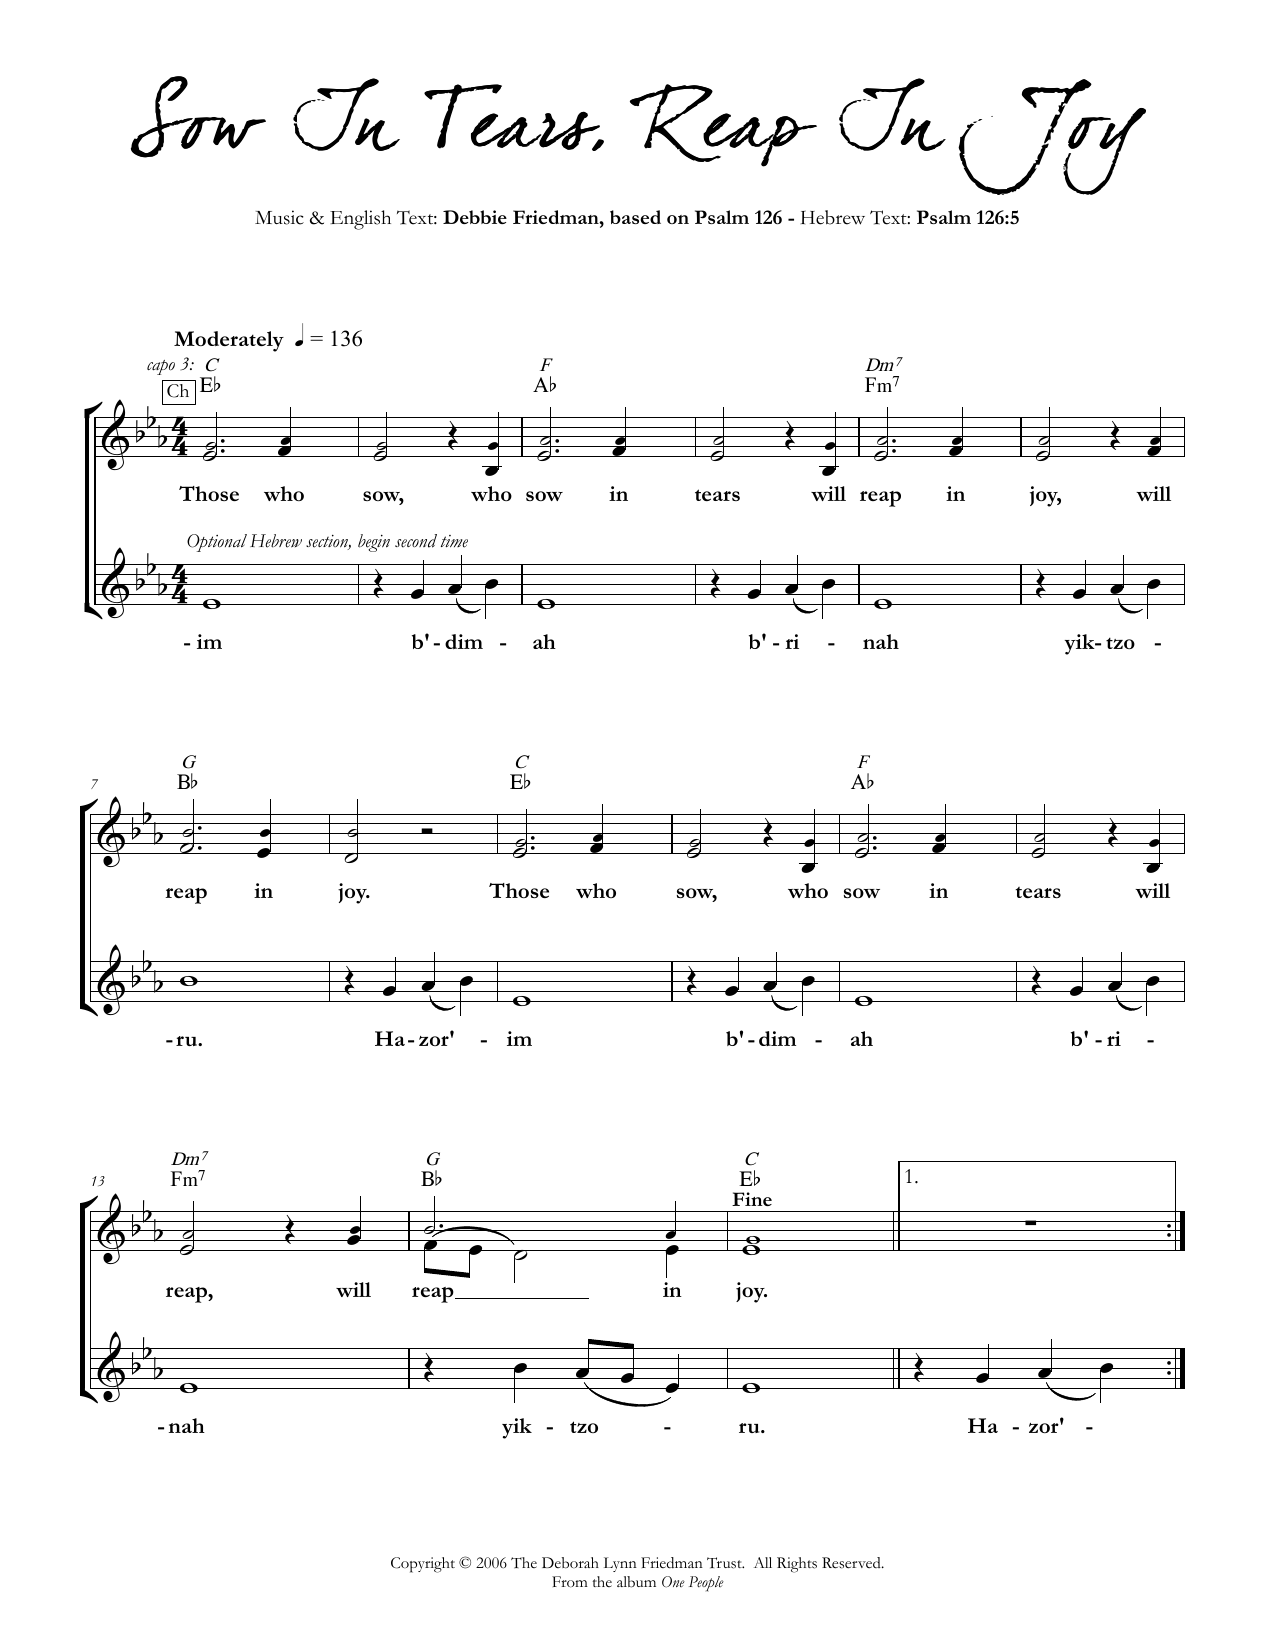 Debbie Friedman Sow In Tears, Reap In Joy Sheet Music Notes & Chords for Lead Sheet / Fake Book - Download or Print PDF